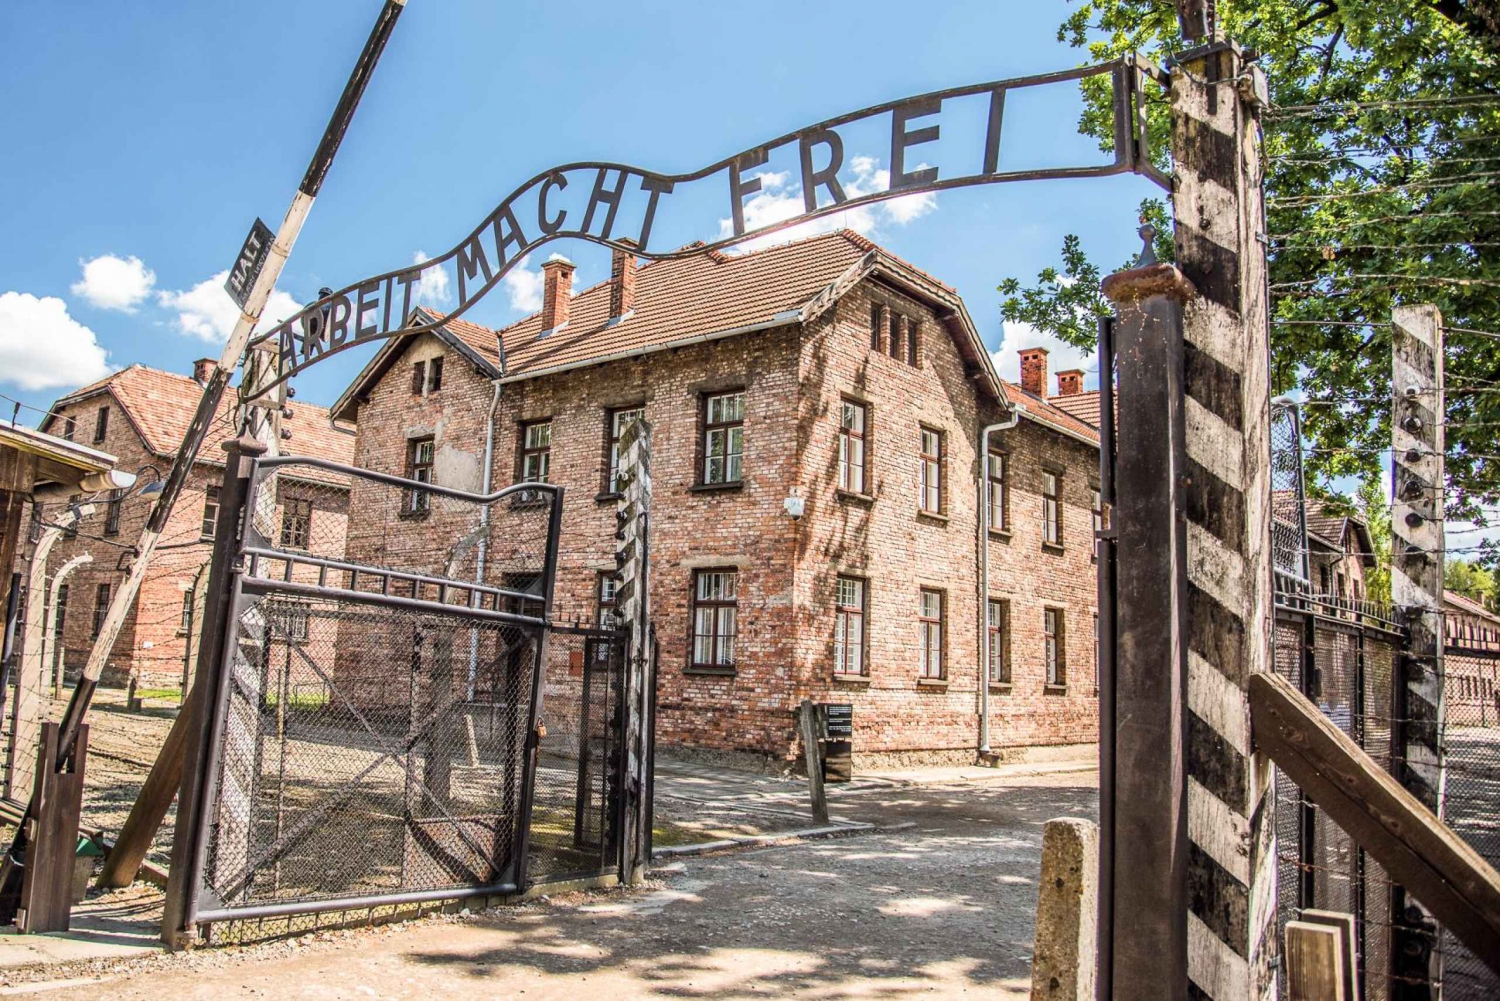 Fra Krakow: Heldagstur til Auschwitz og Wieliczka-saltminen